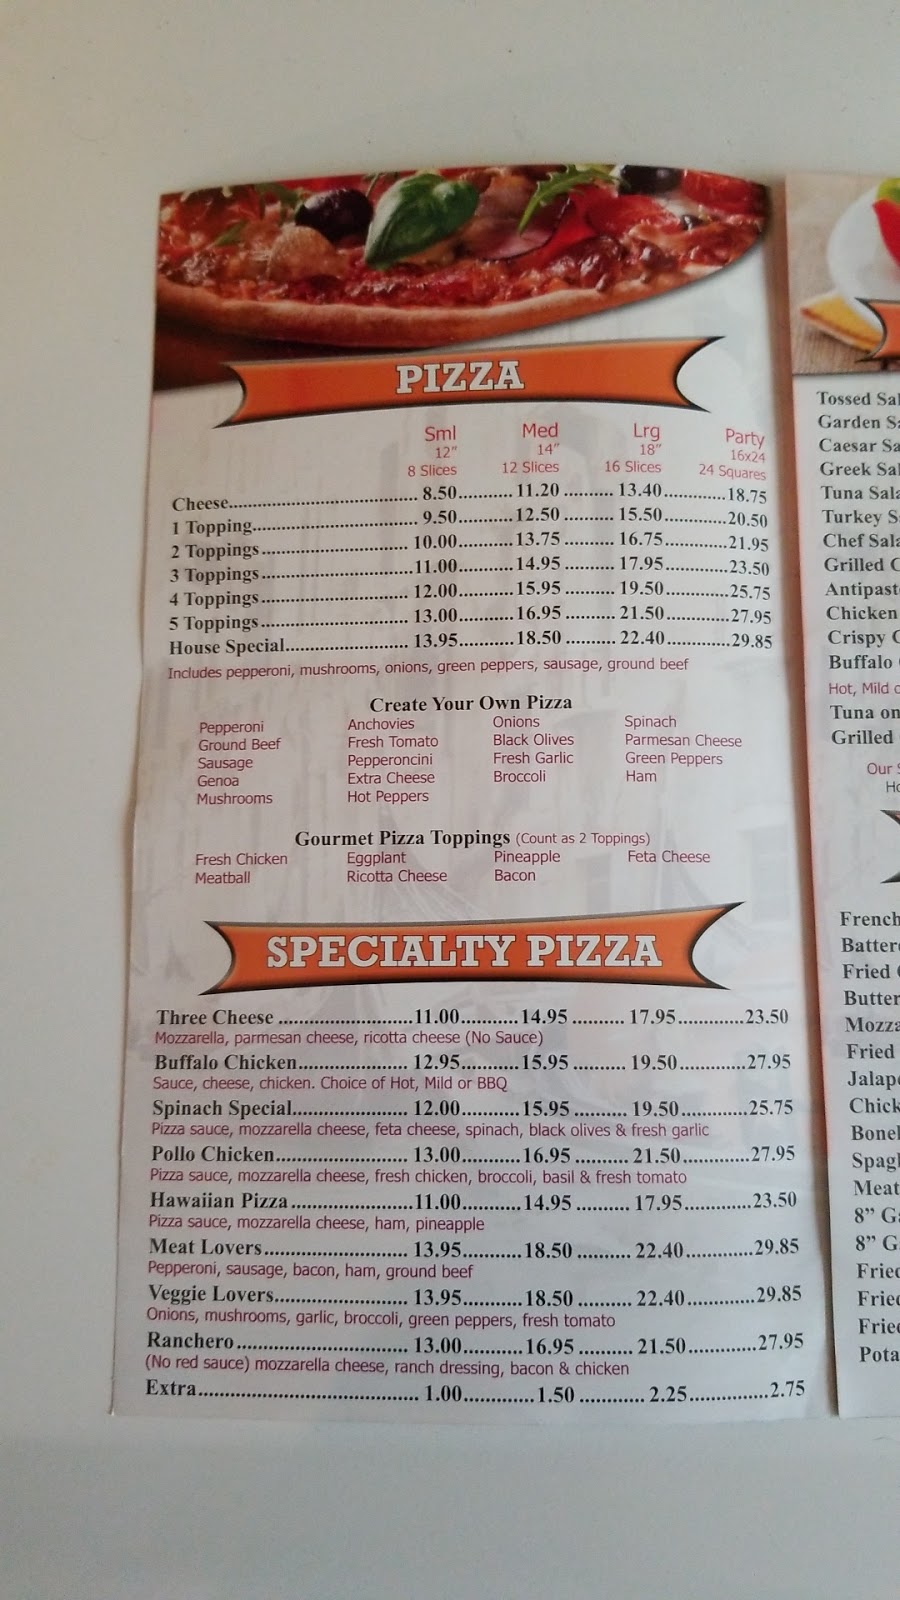 Village Pizza | 1164 Westfield St, West Springfield, MA 01089 | Phone: (413) 739-3327